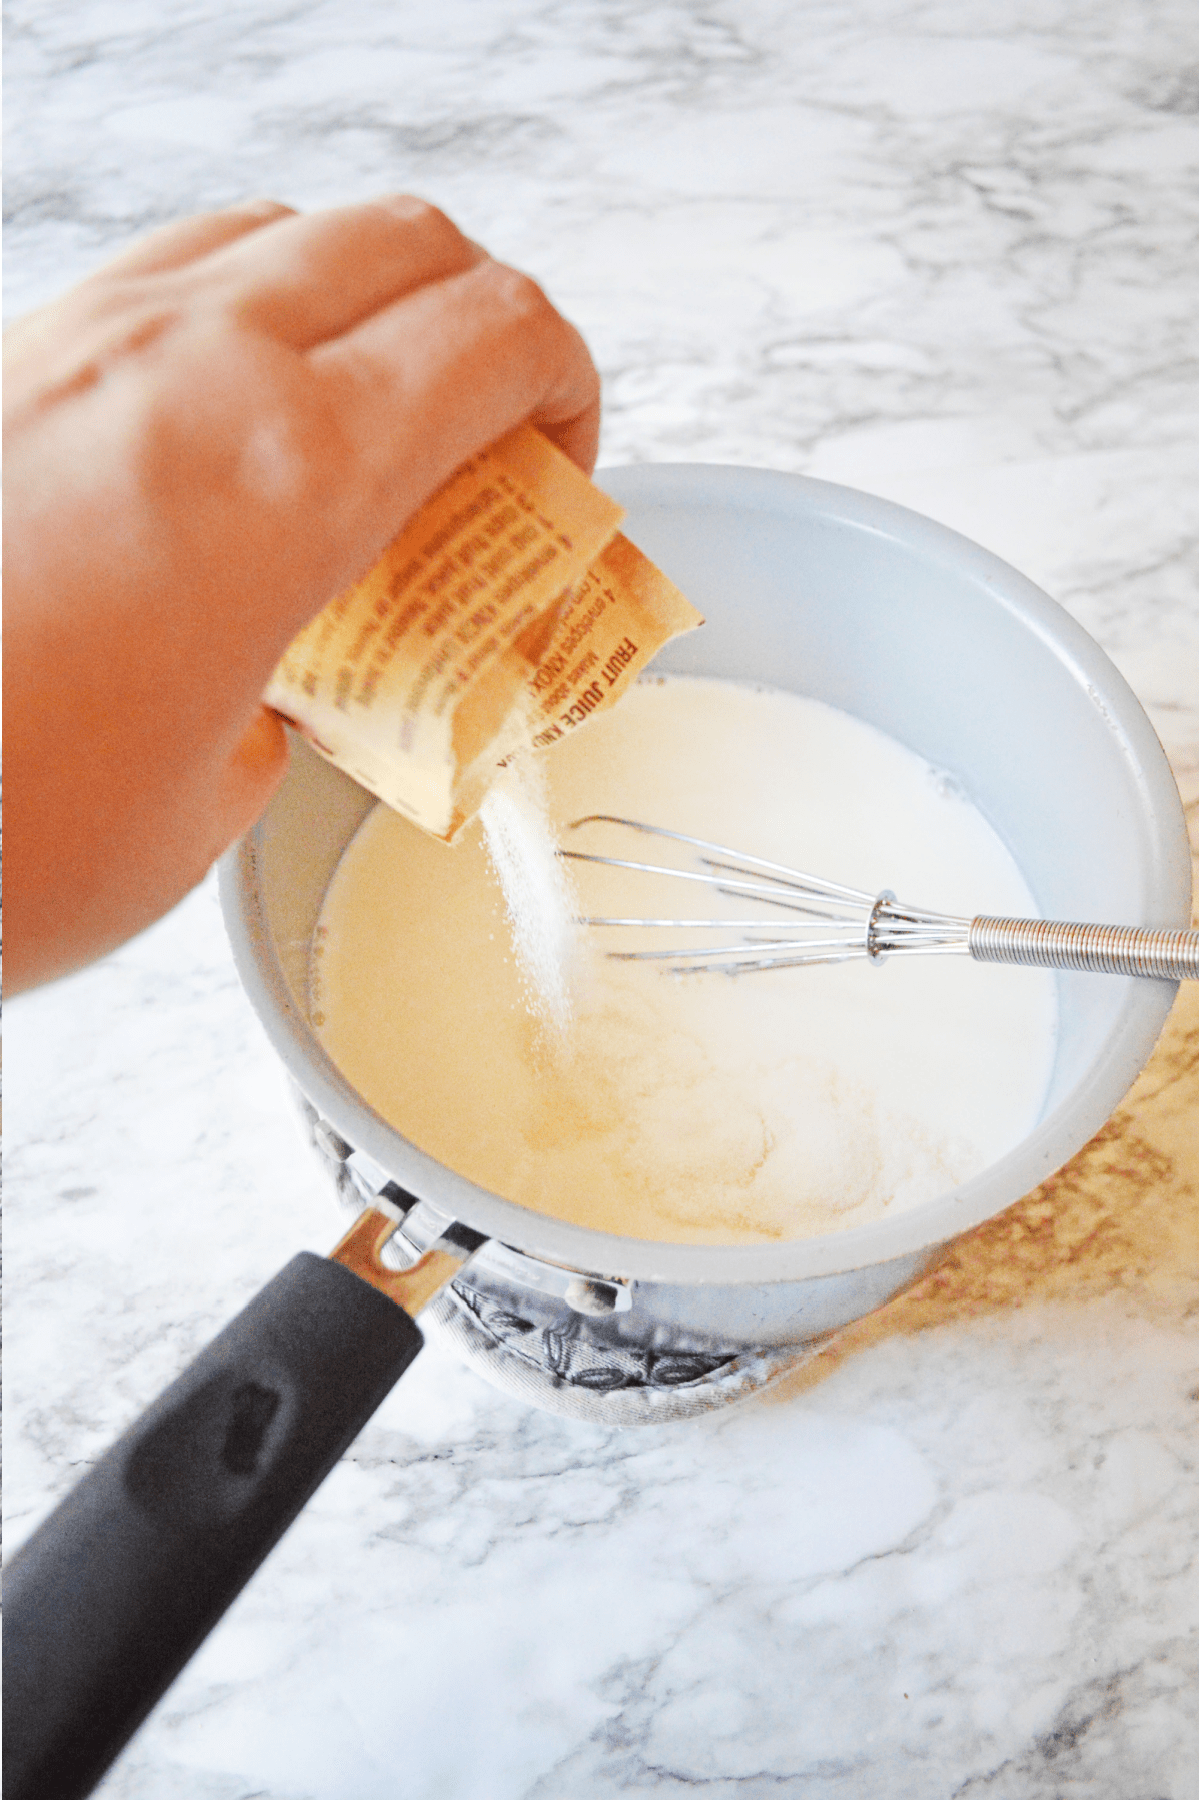 Pouring gelatin into condensed milk